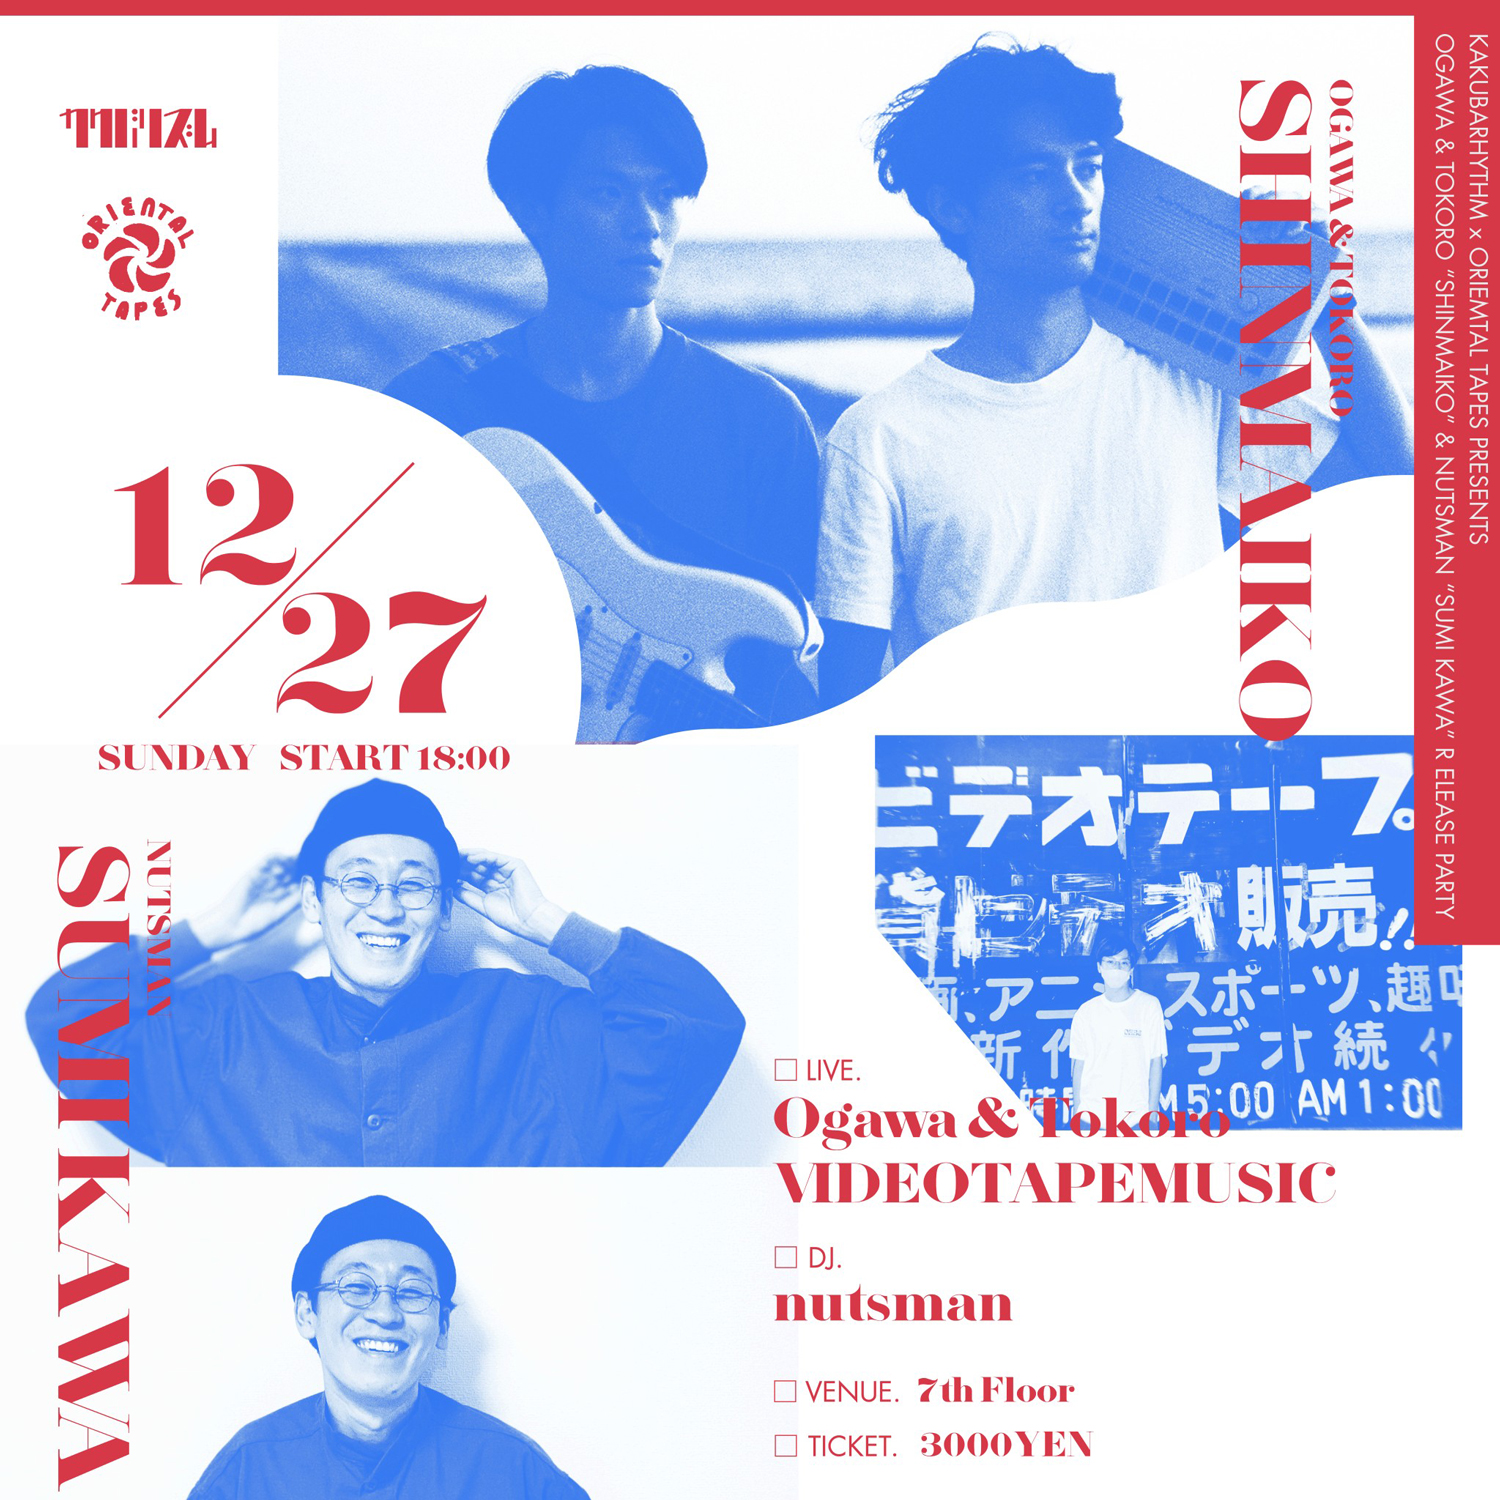 KAKUBARHYTHM x Oriental Tapes presents Ogawa & Tokoro “Shinmaiko” & nutsman “sumi kawa” Release Party